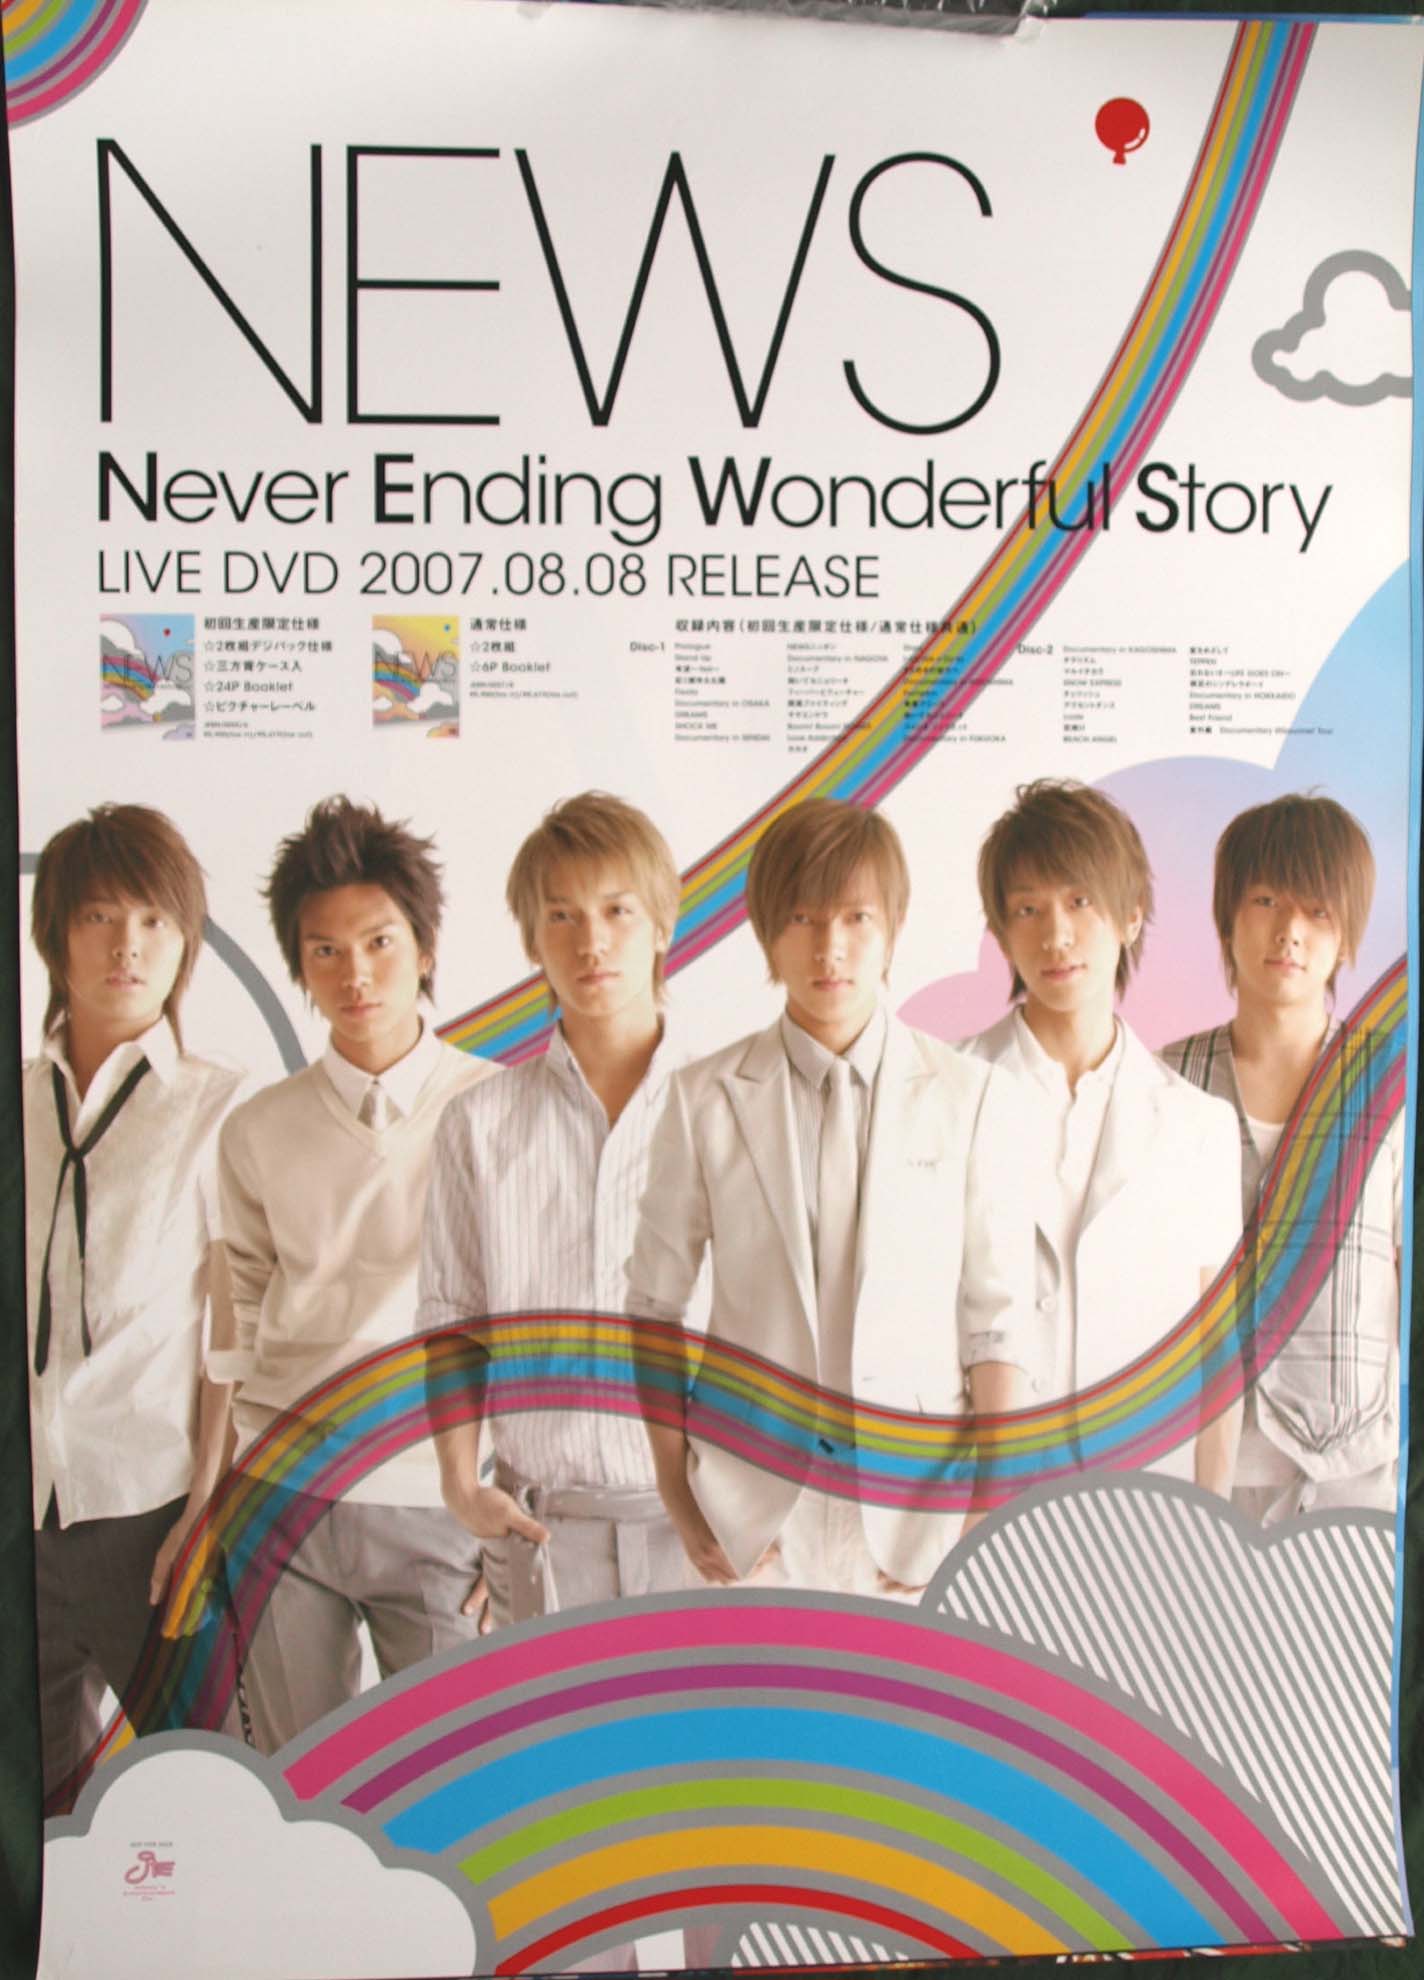 NEWS 「Never Ending Wonderful Story」のポスター